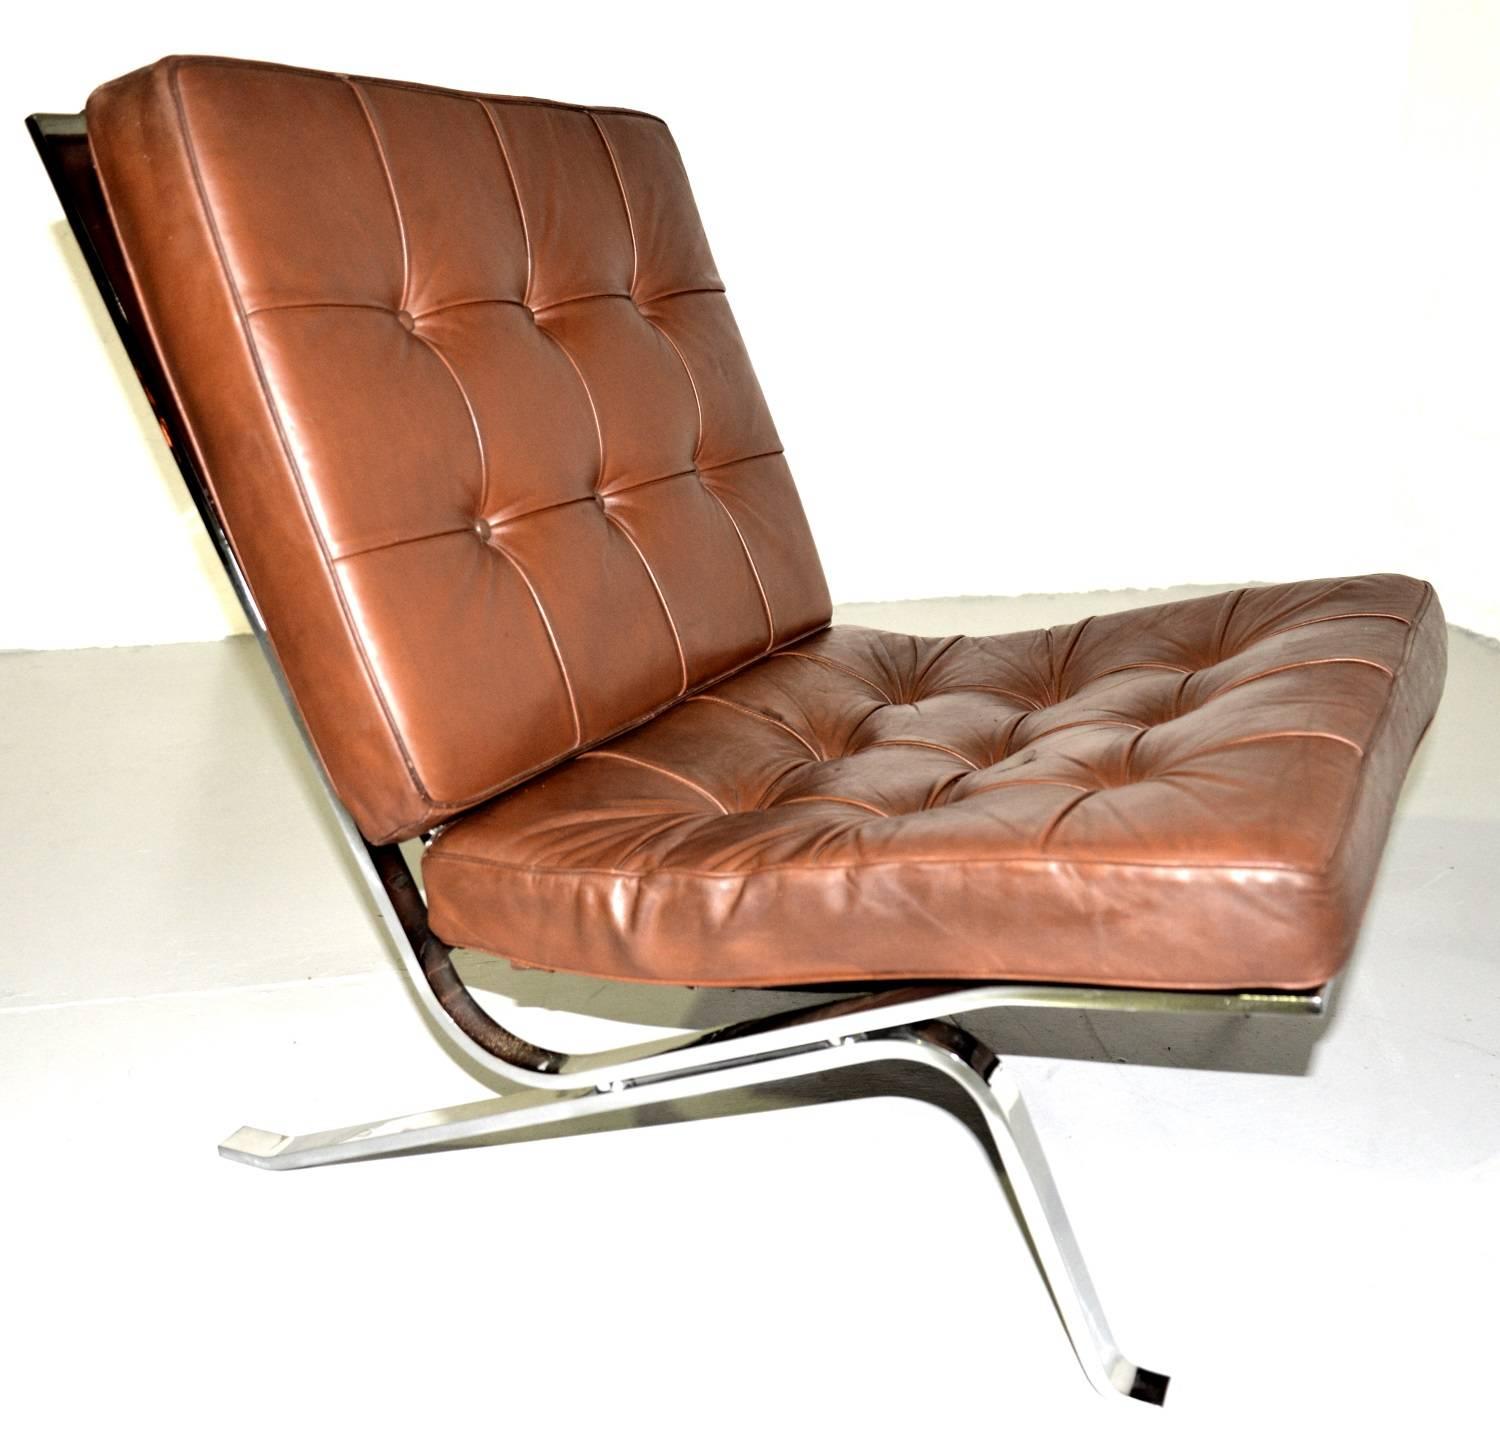 Swiss Vintage RH-301 Lounge Chair by Robert Haussmann for De Sede, Switzerland 1954 For Sale